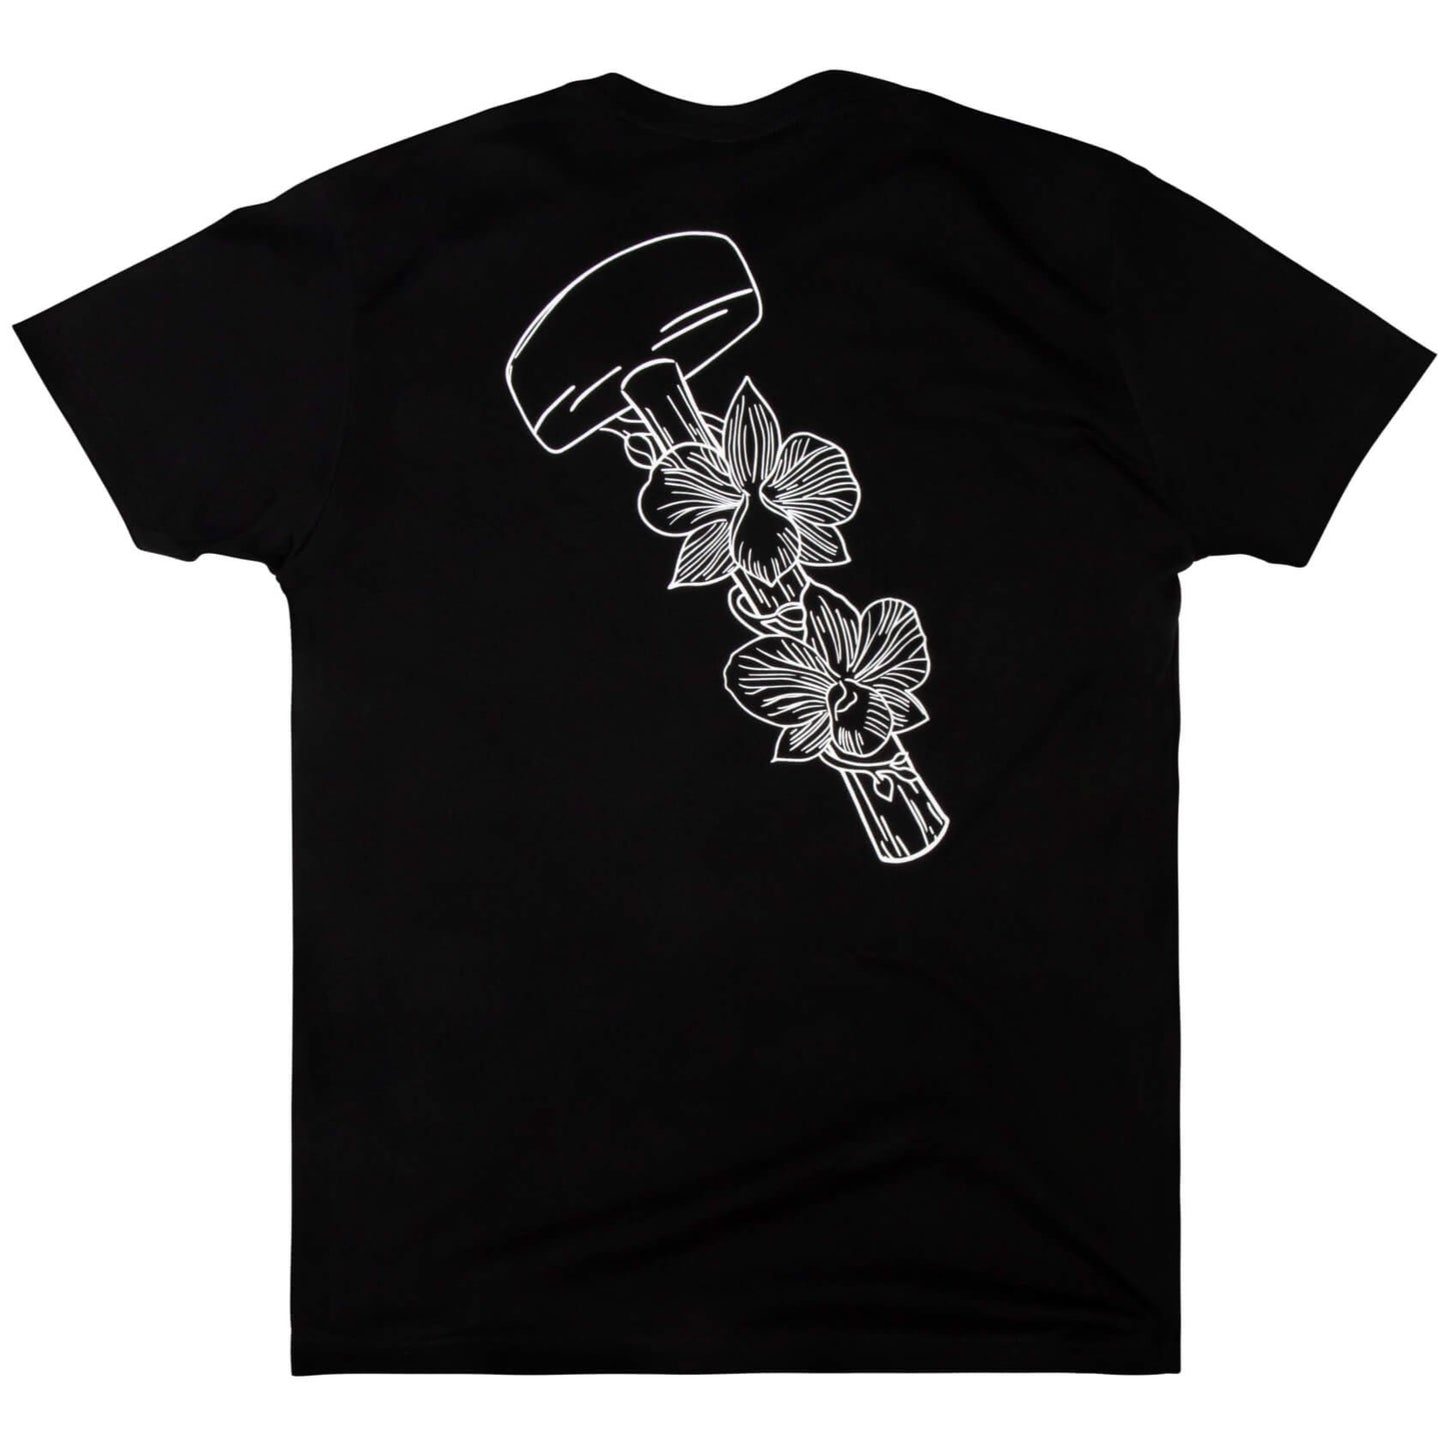 Ariete Team T-shirt - Black